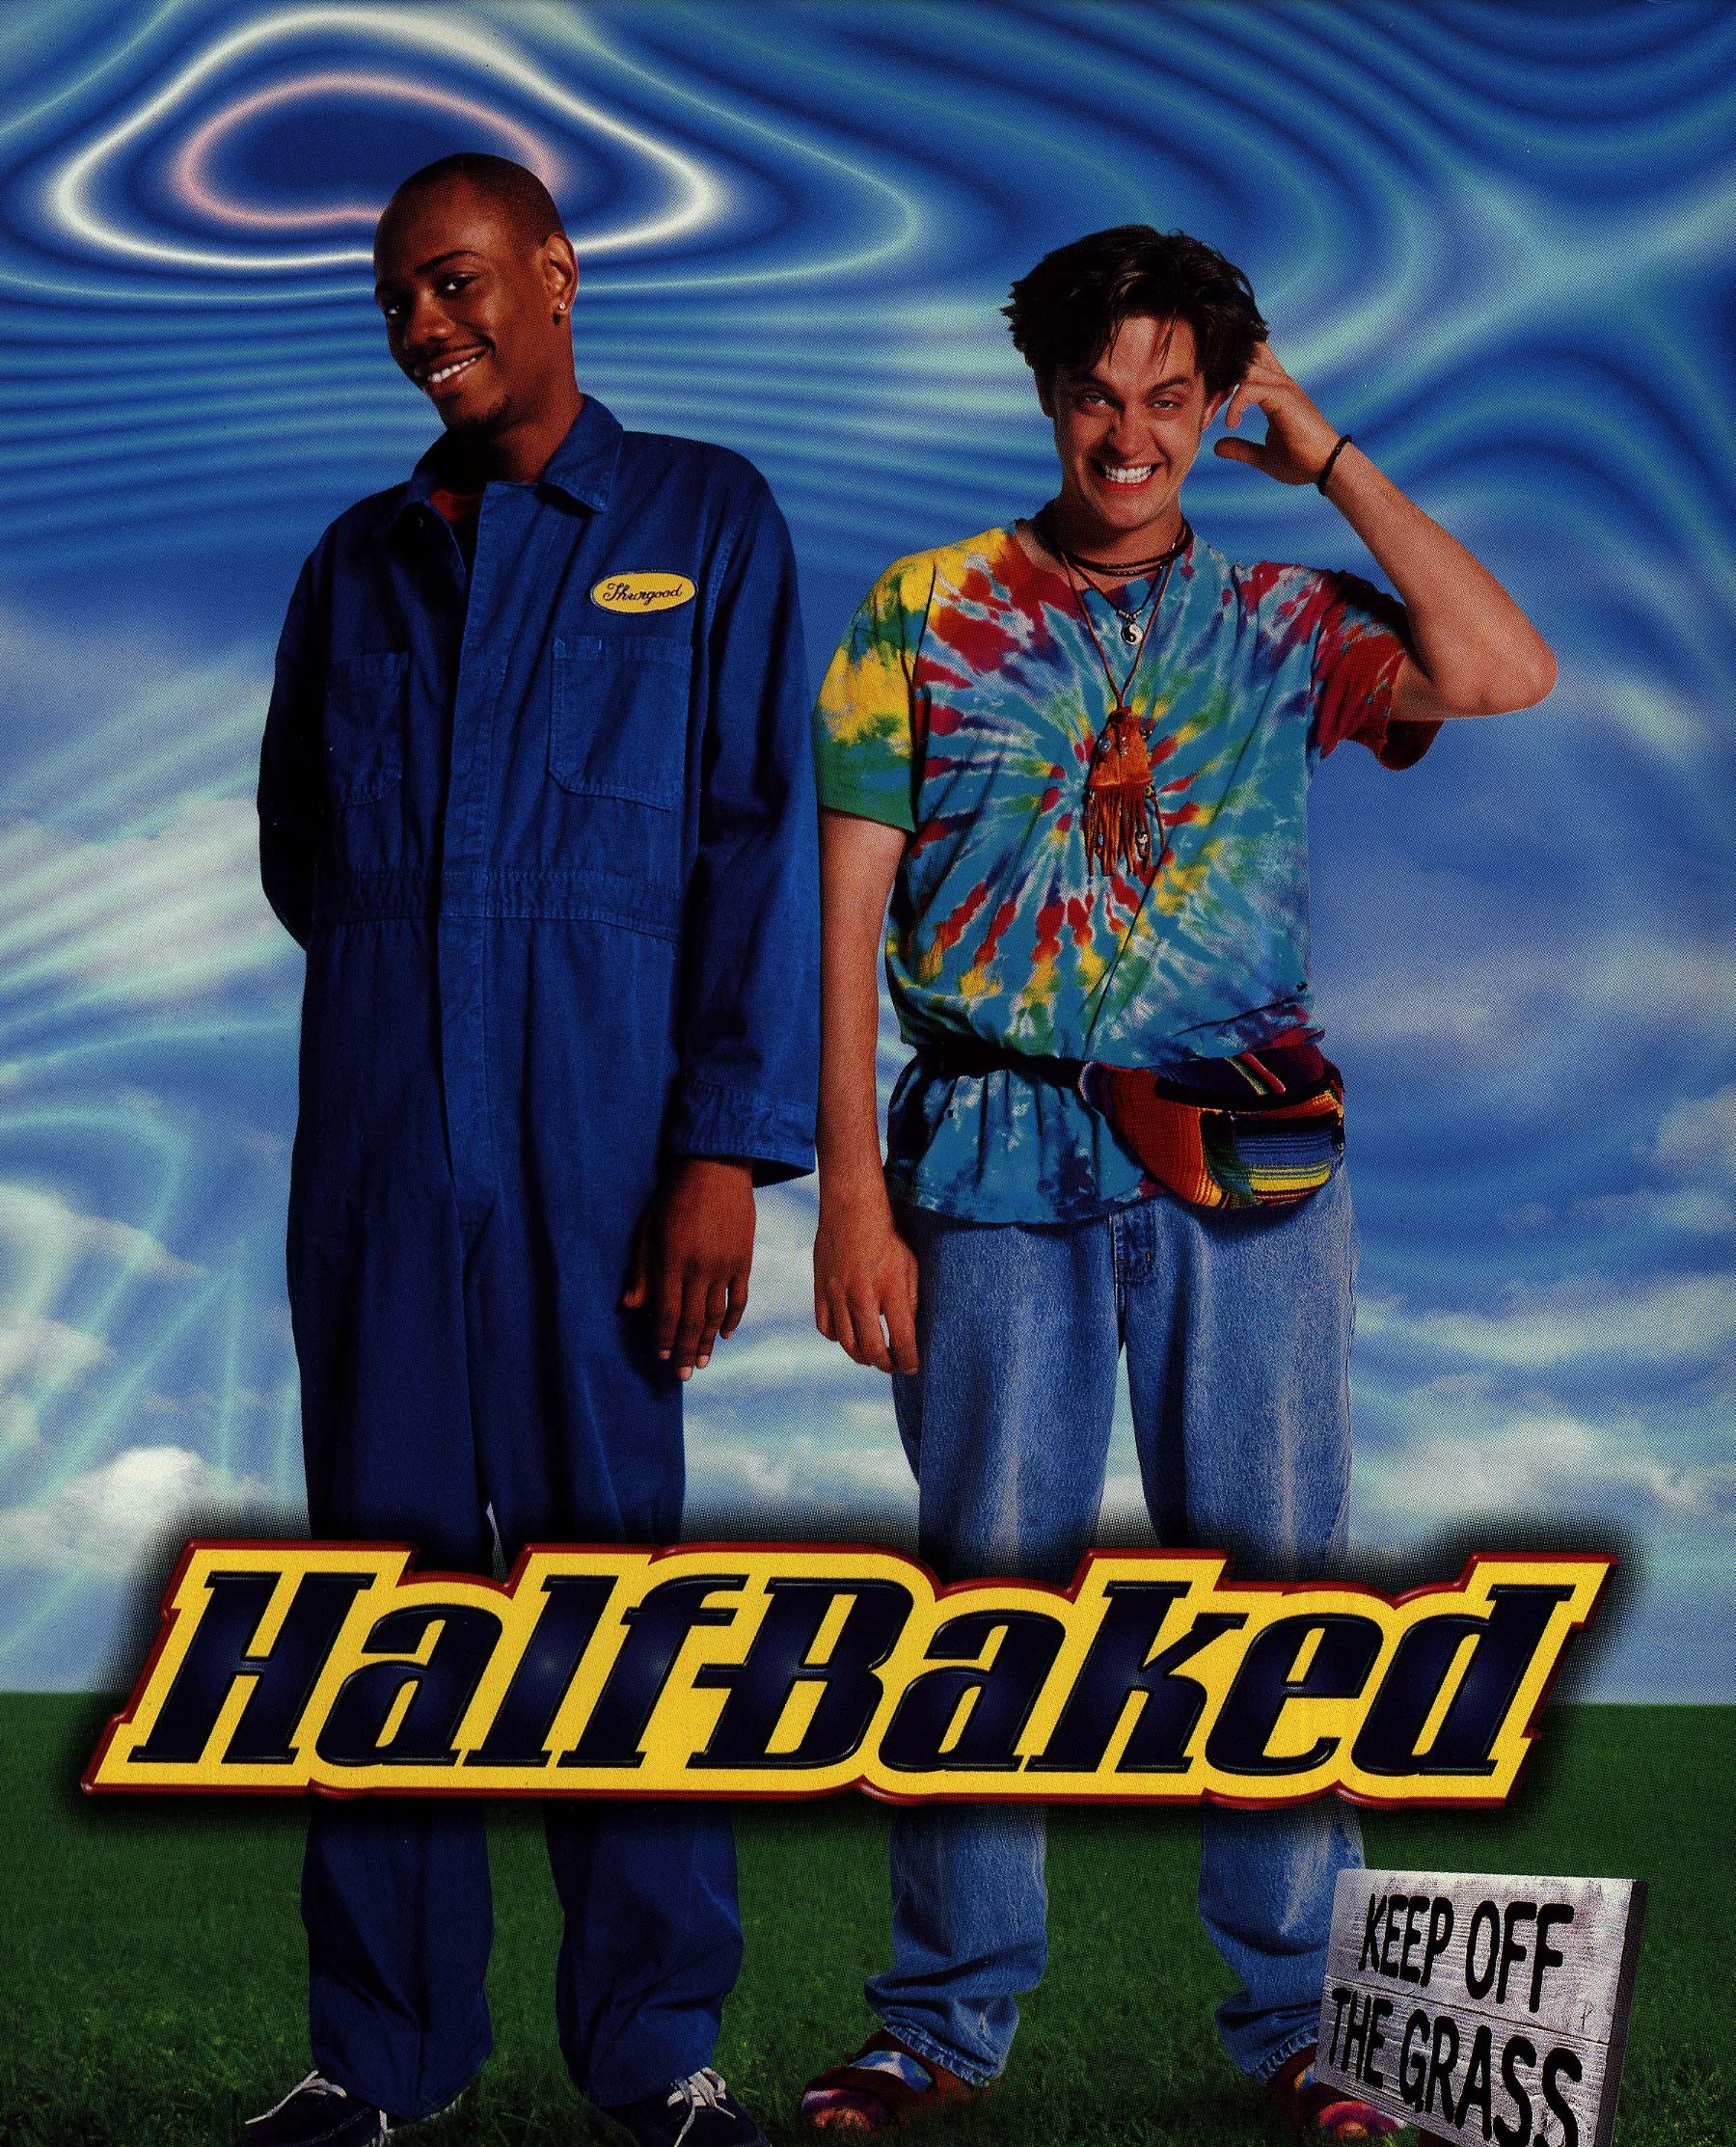 Half Baked (1998)  Image Source: http://l.yimg.com/eb/ymv/us/img/hv ...